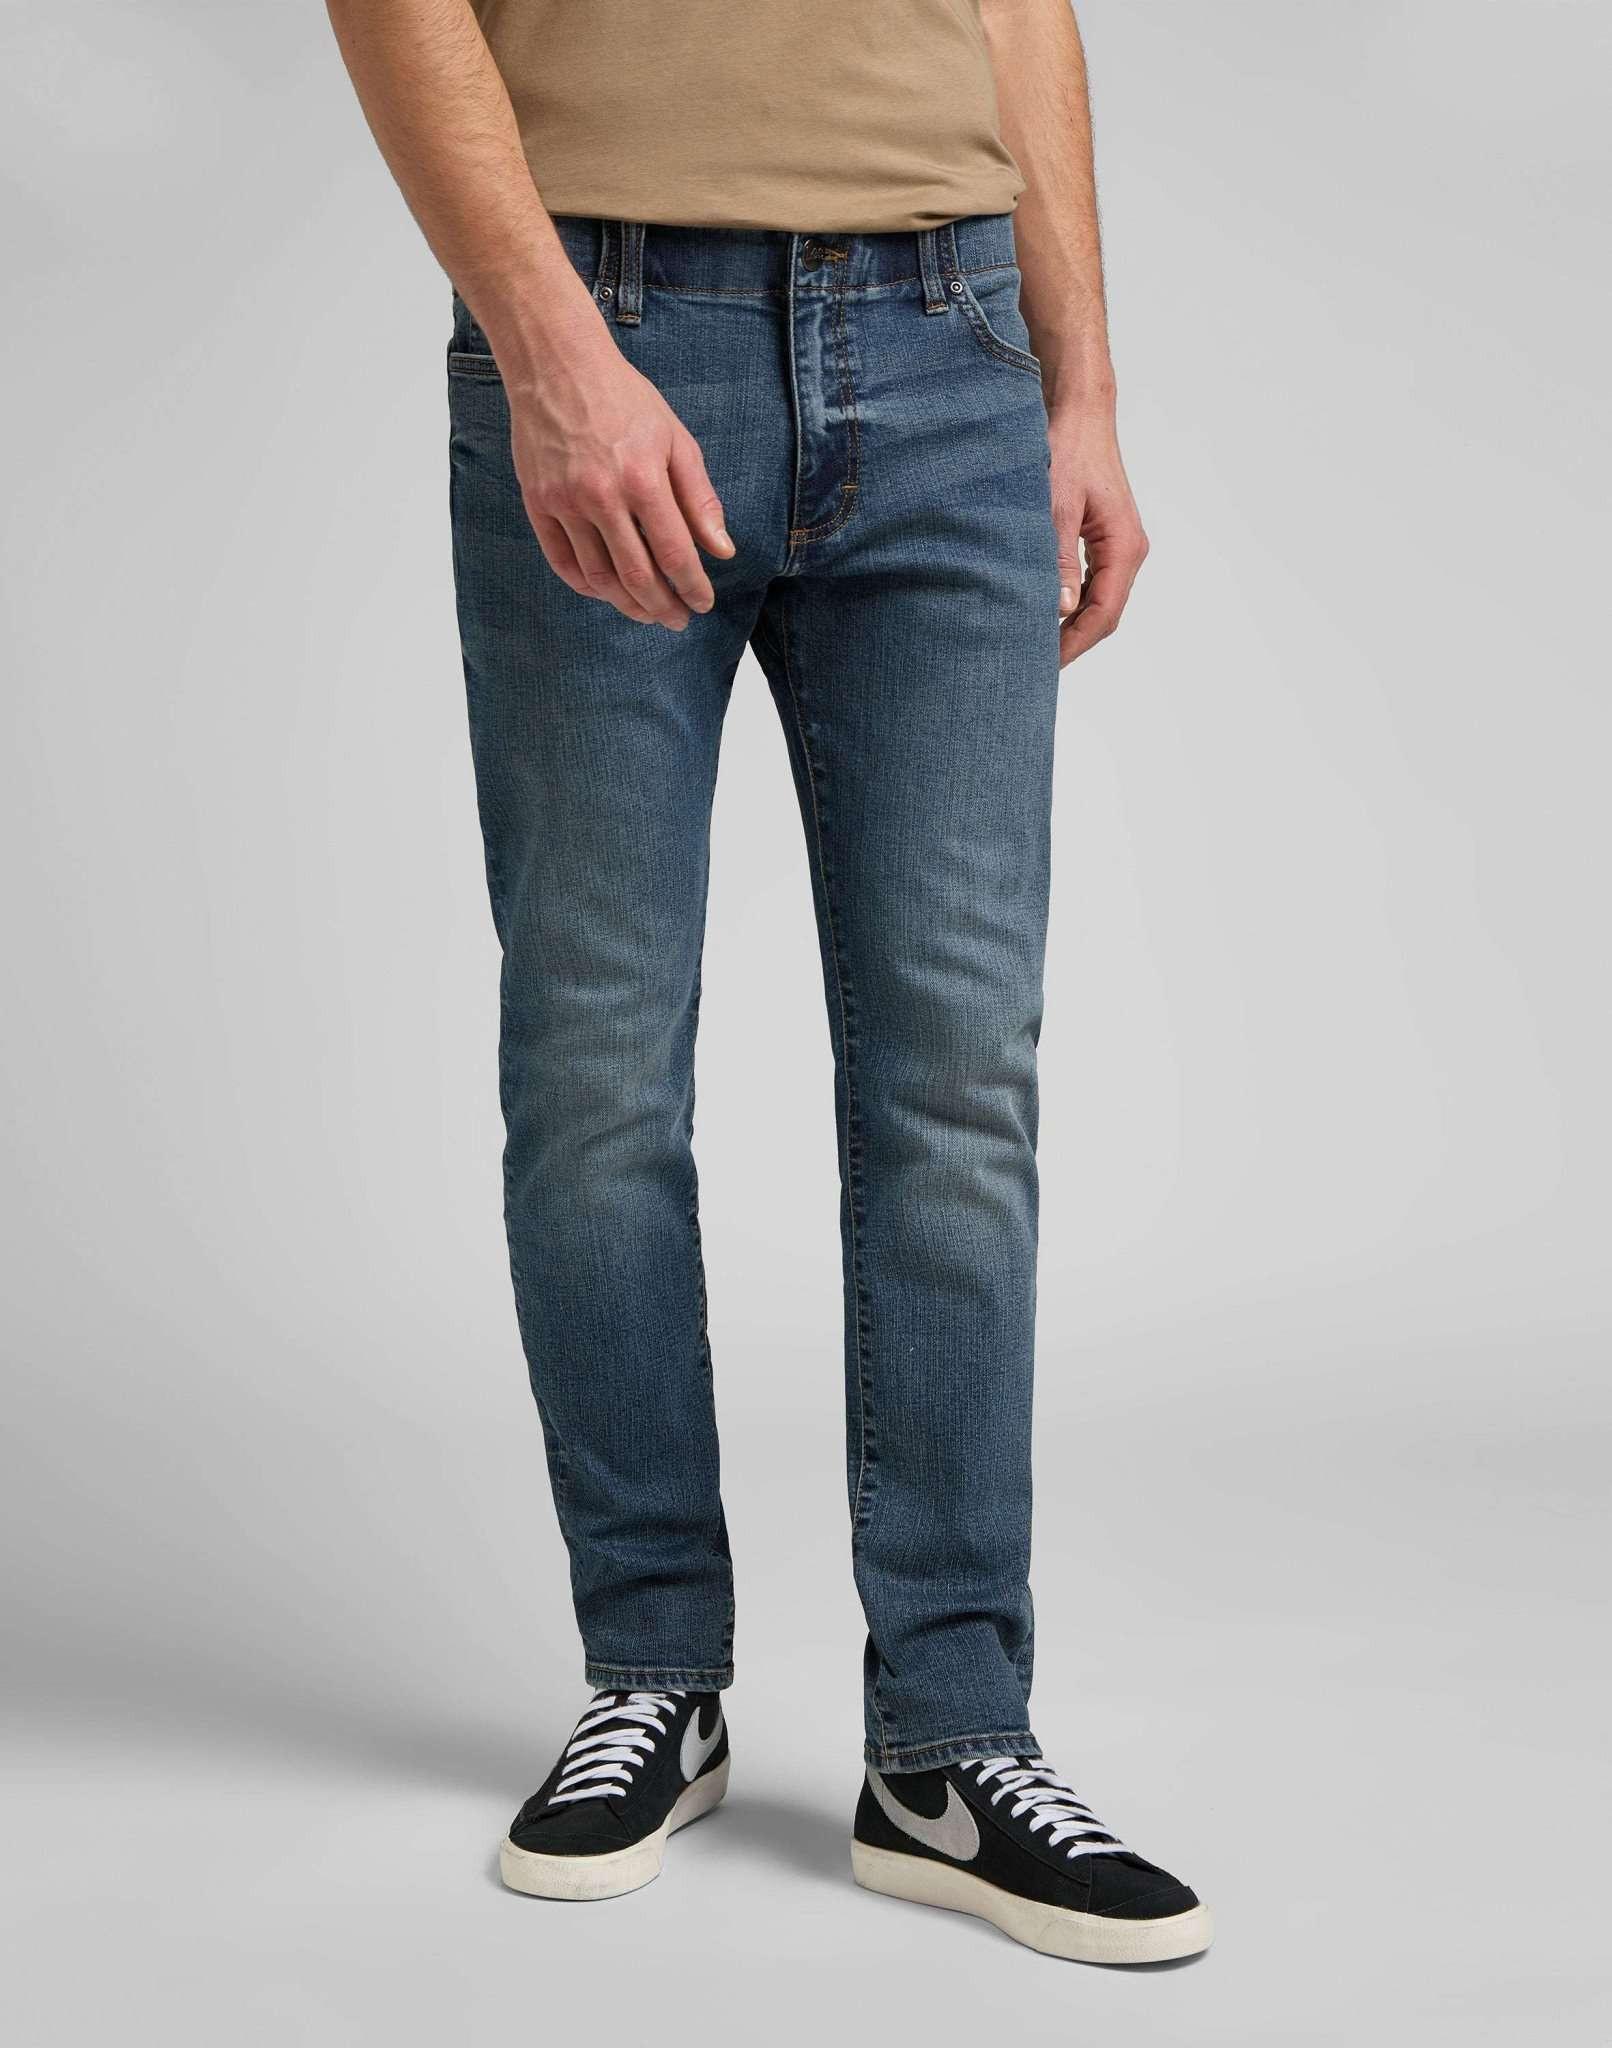 Jeans Skinny Fit Xm Herren Blau Denim L34/W30 von Lee